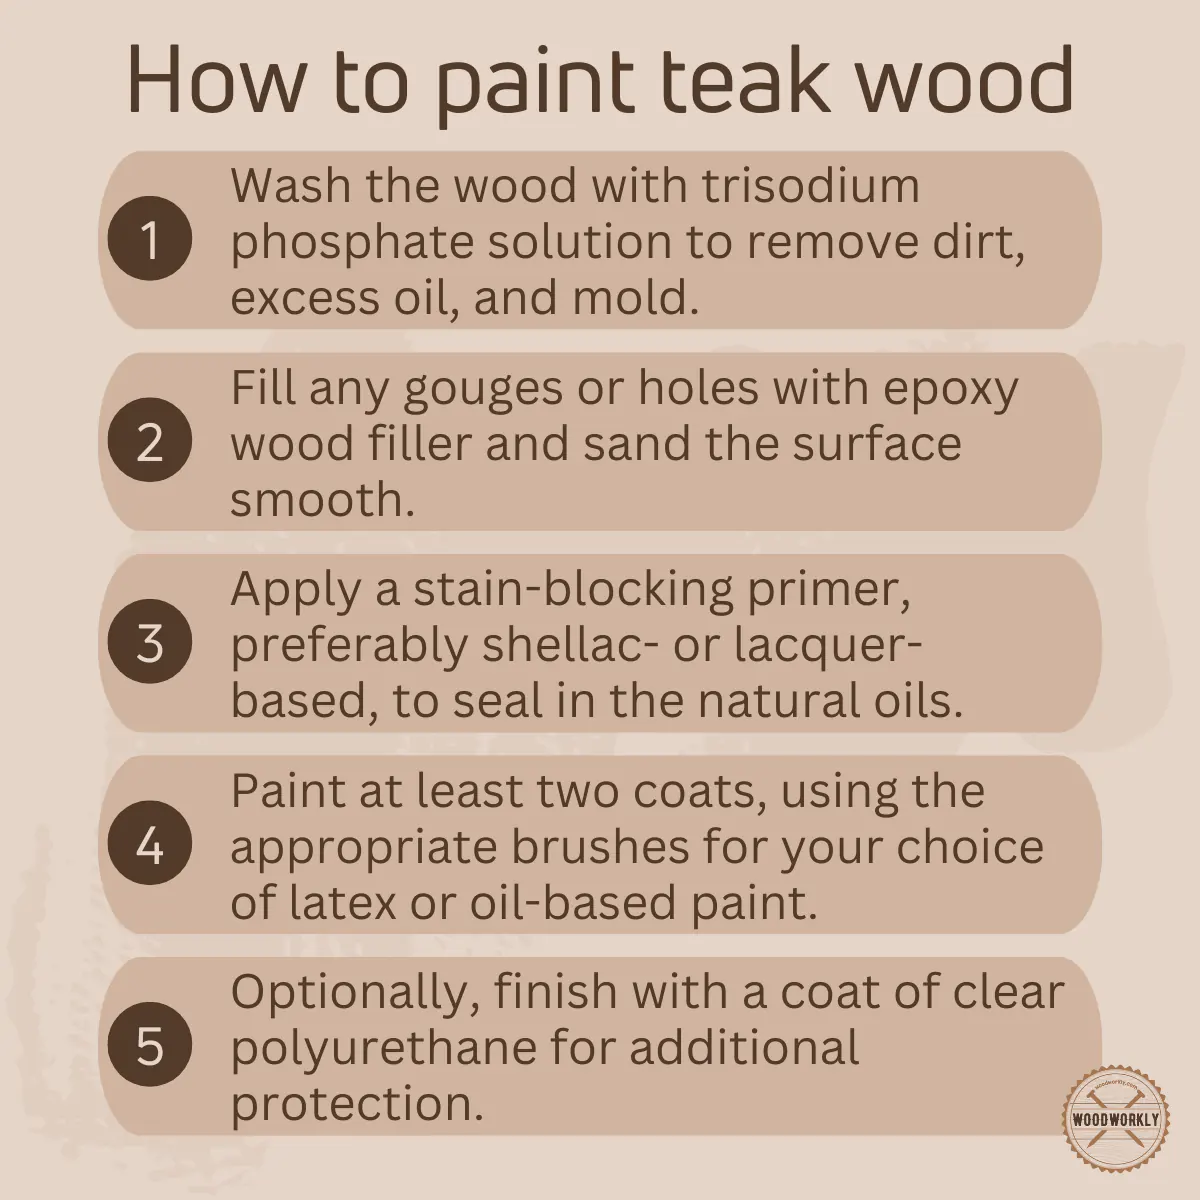 How to paint teak wood